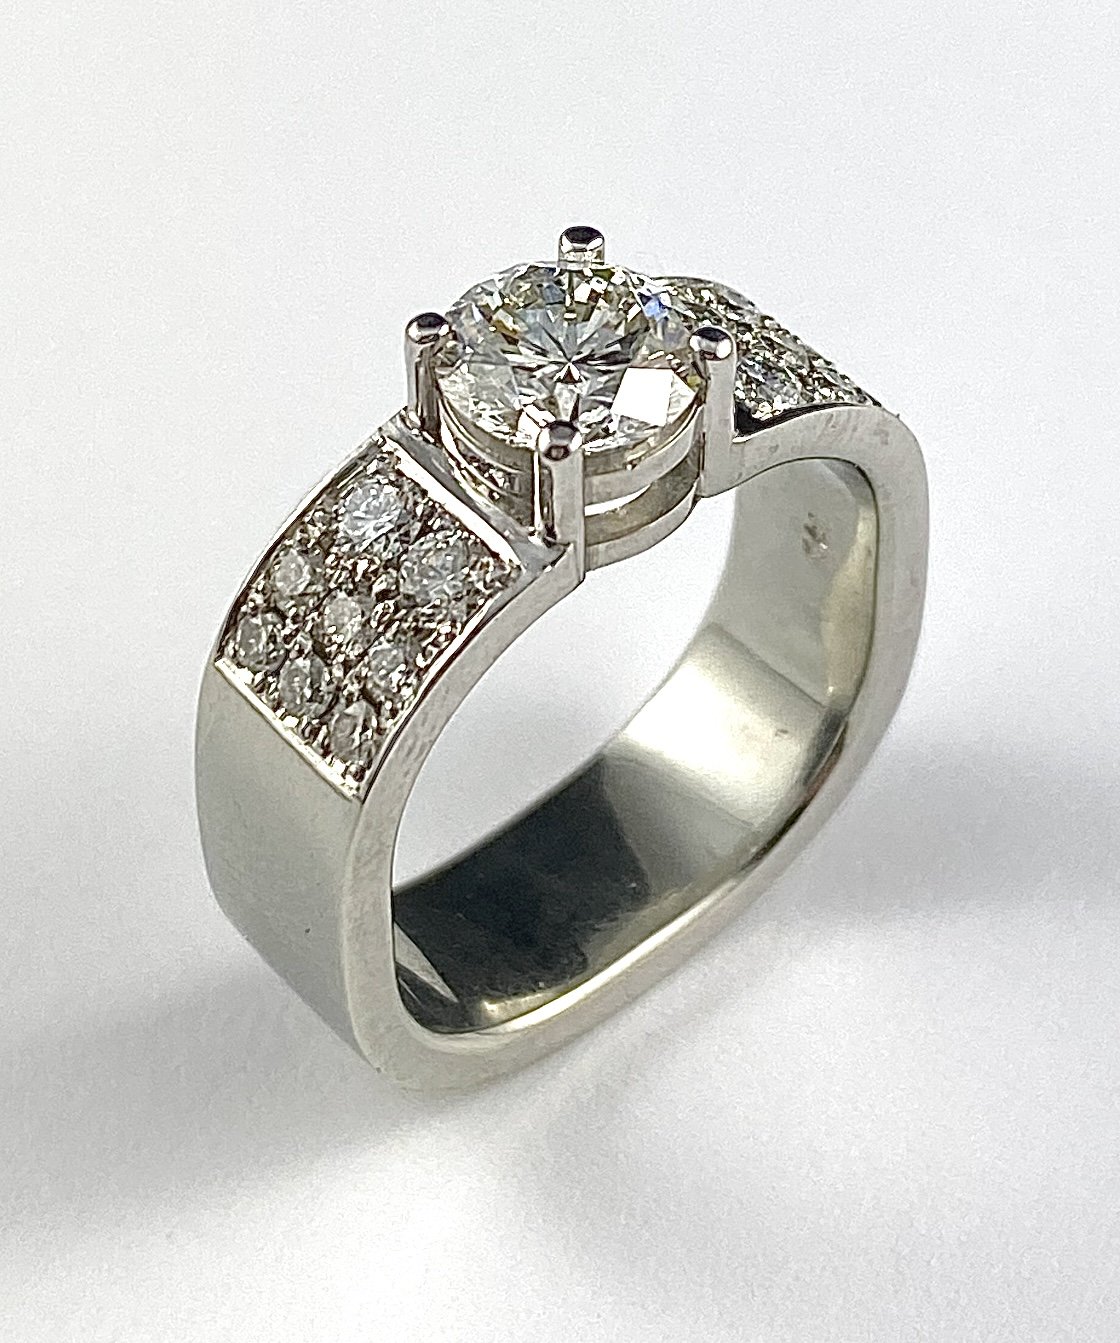 19K White Gold Diamond Ring